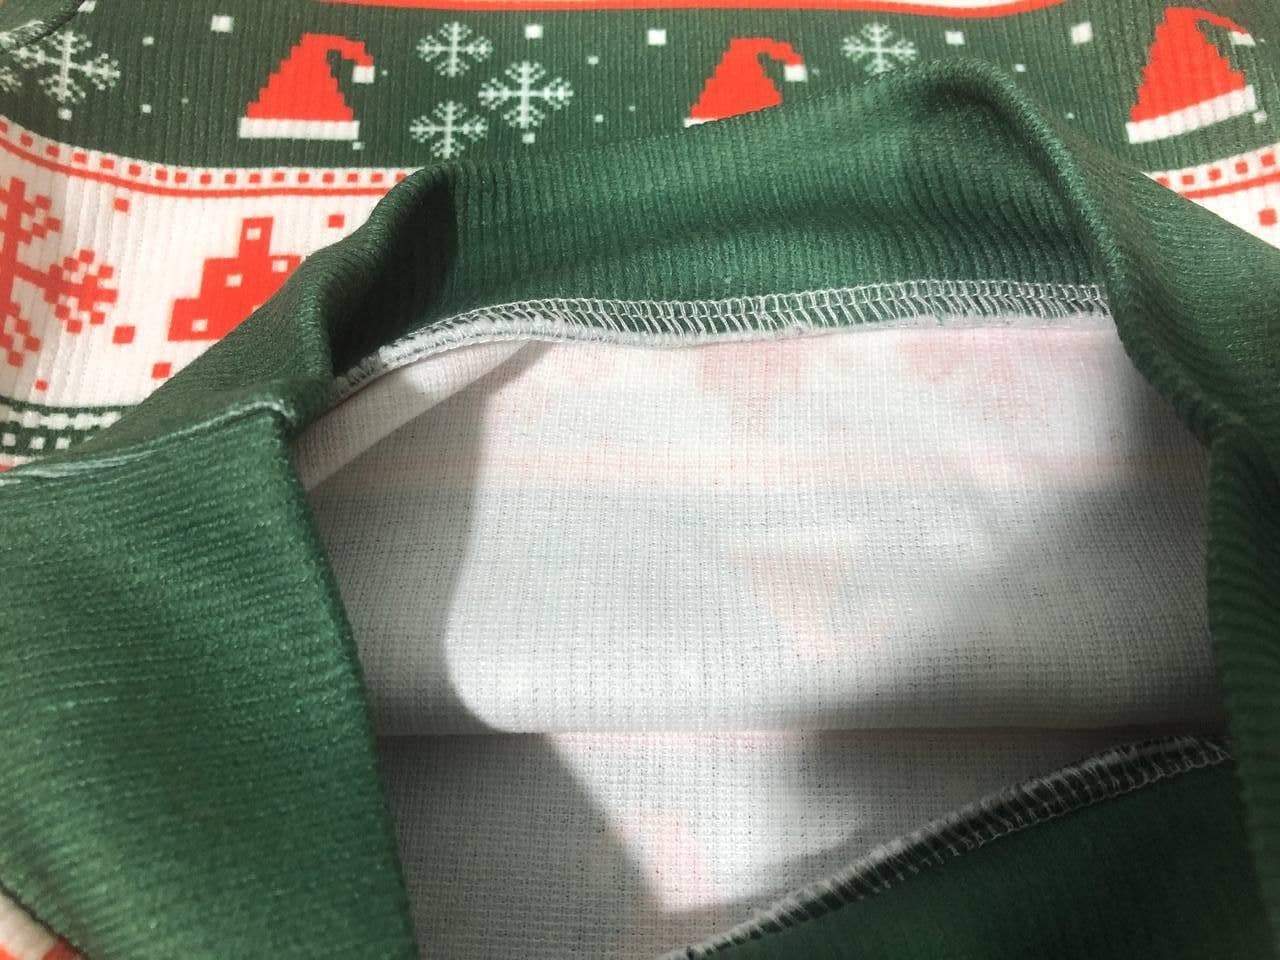 Re Zero Anime Ugly Christmas Sweater Custom Xmas Gift